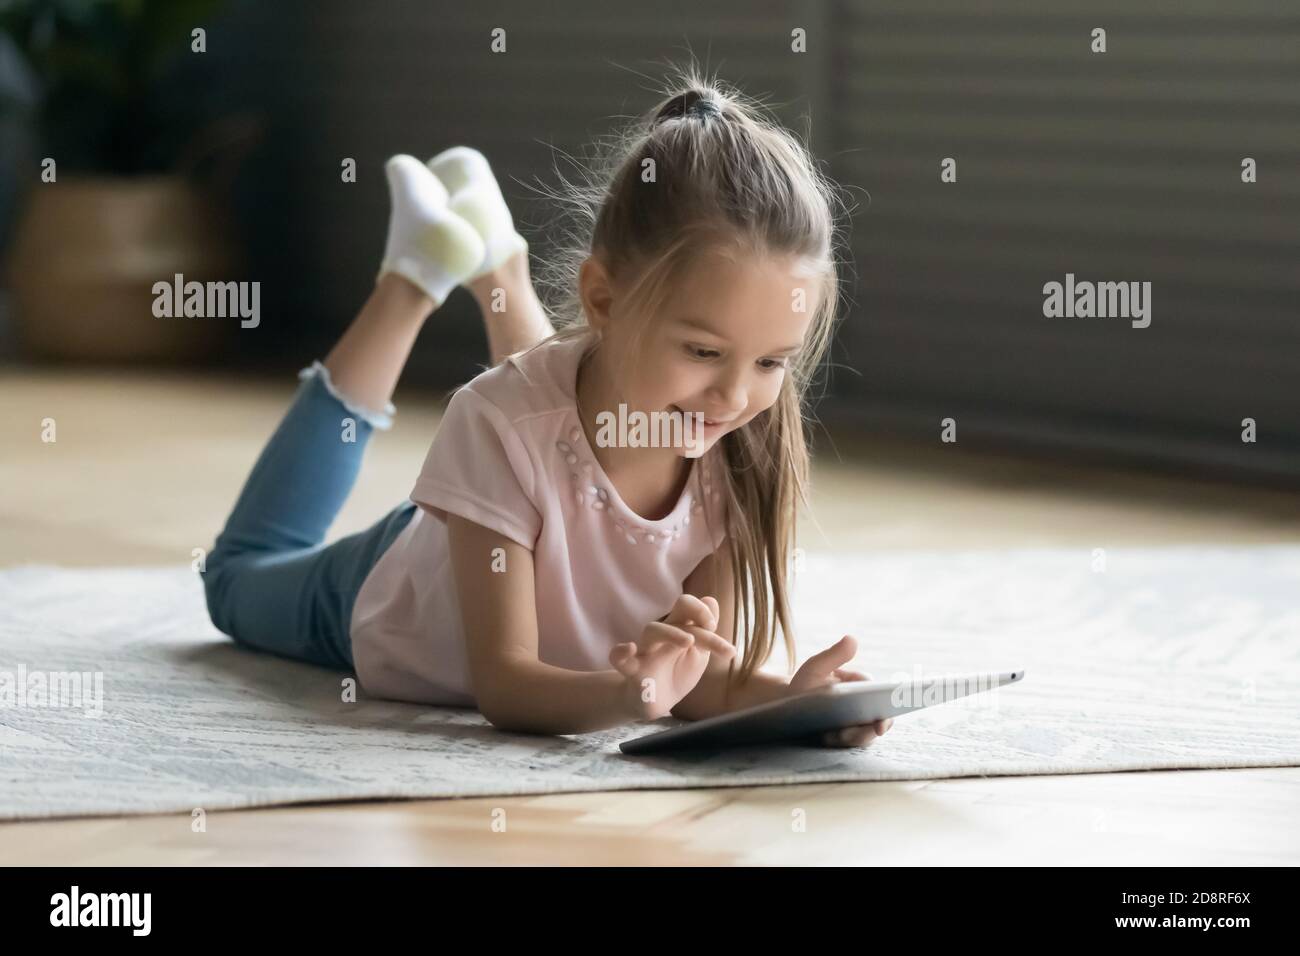 Happy little preschool child girl using computer tablet. Stock Photo